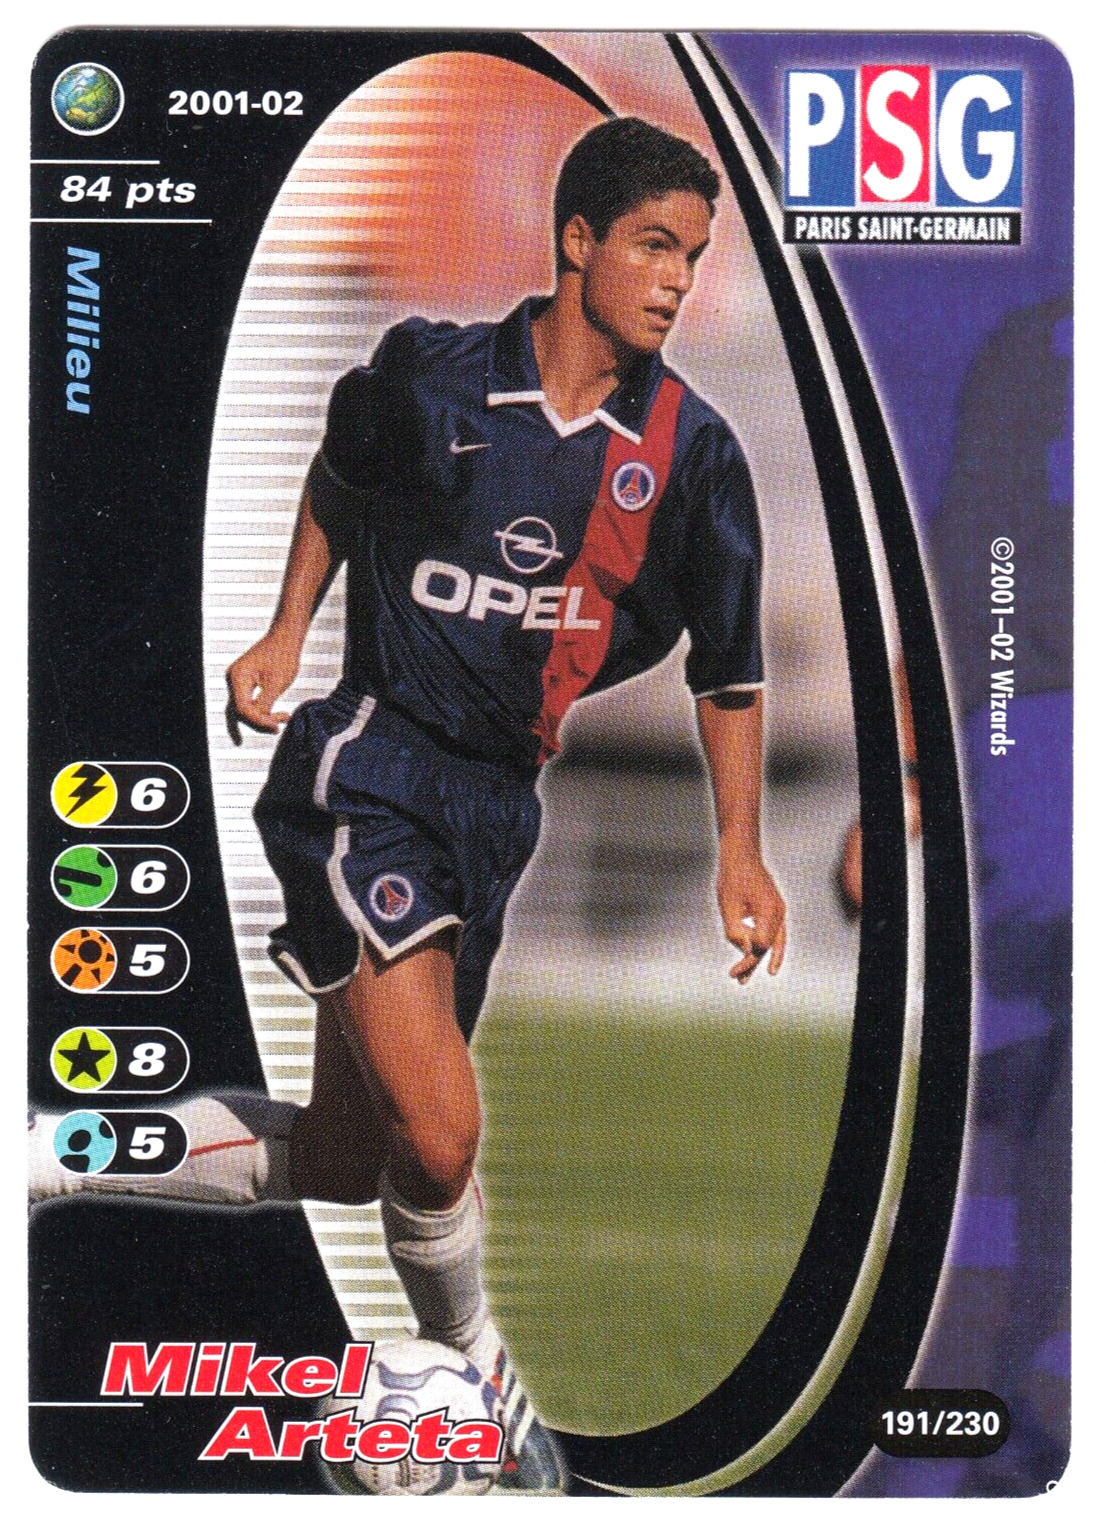 2001-02 Wizards Football Champions Ligue 1 Mikel Arteta Rookie RC PSG #191